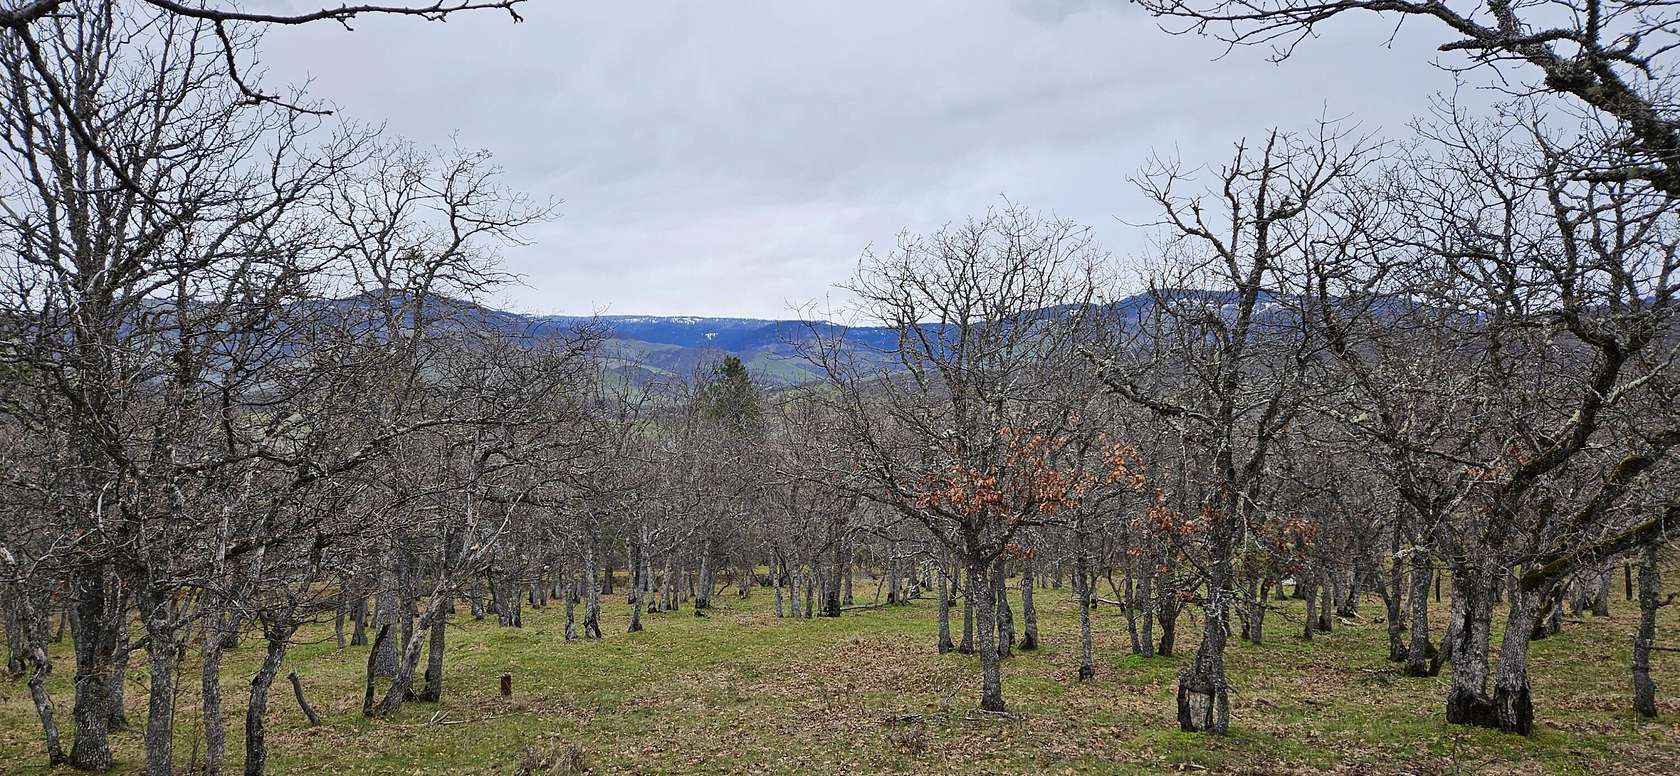 24 Acres of Land for Sale in Ashland, Oregon